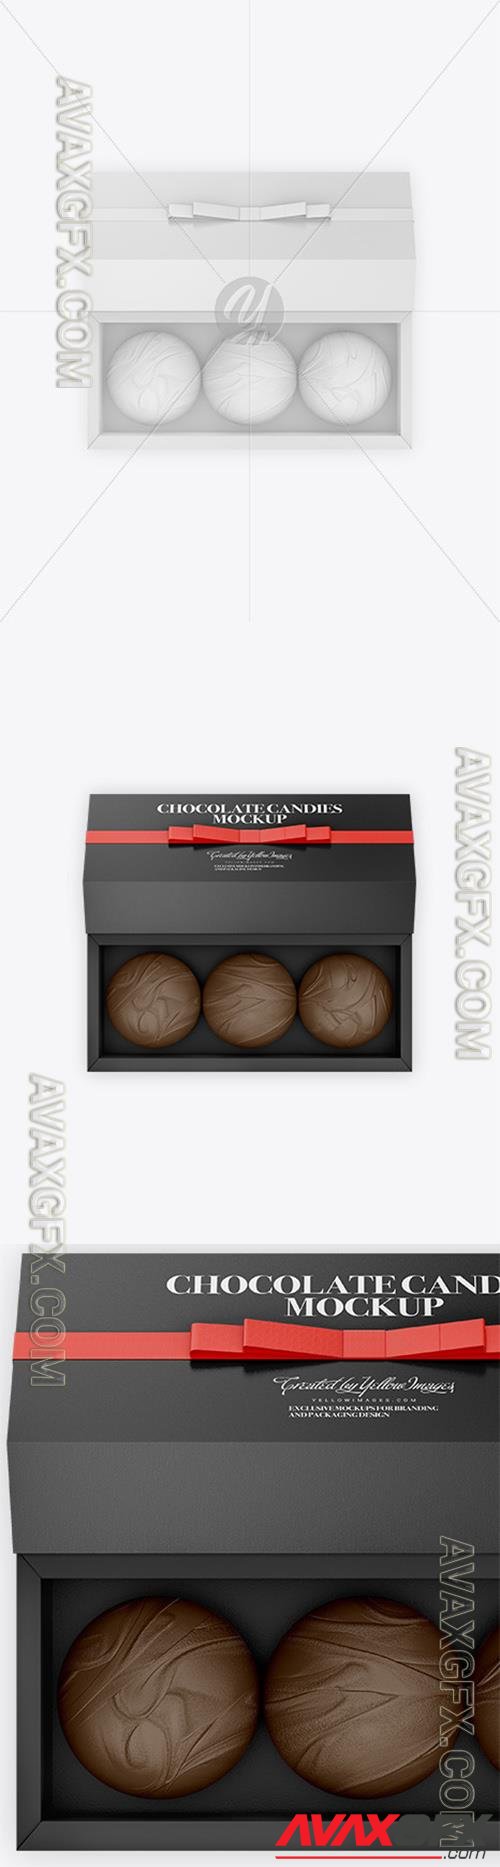 Gift Box with Chocolates Mockup 72889 TIF